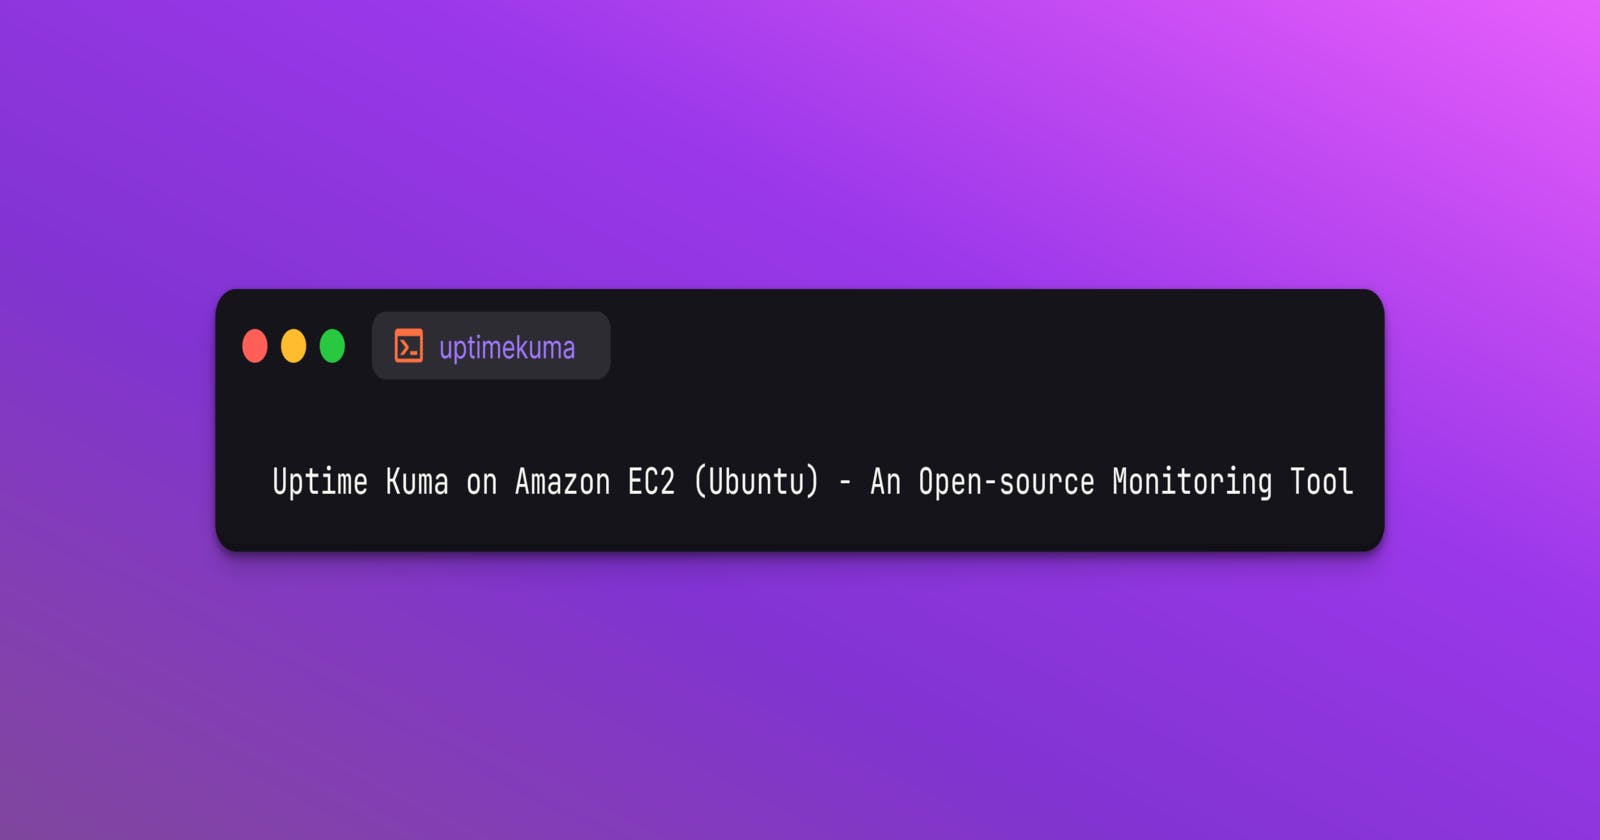 Uptime Kuma on Amazon EC2 (Ubuntu) - An Open-source Monitoring Tool